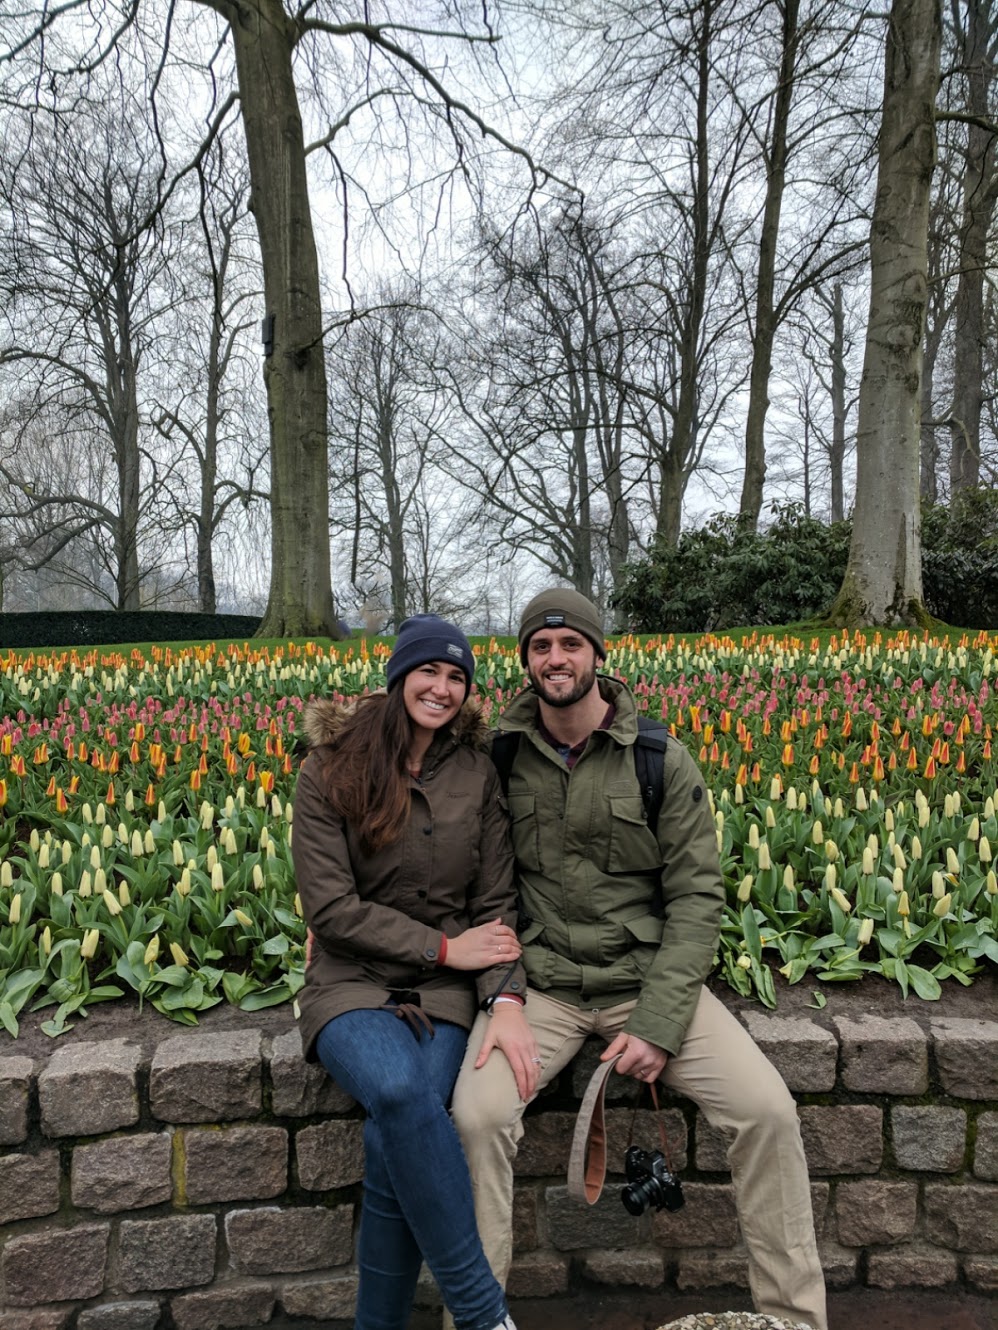 2018 04 02 12 52 41 - Amsterdam Travel Guide